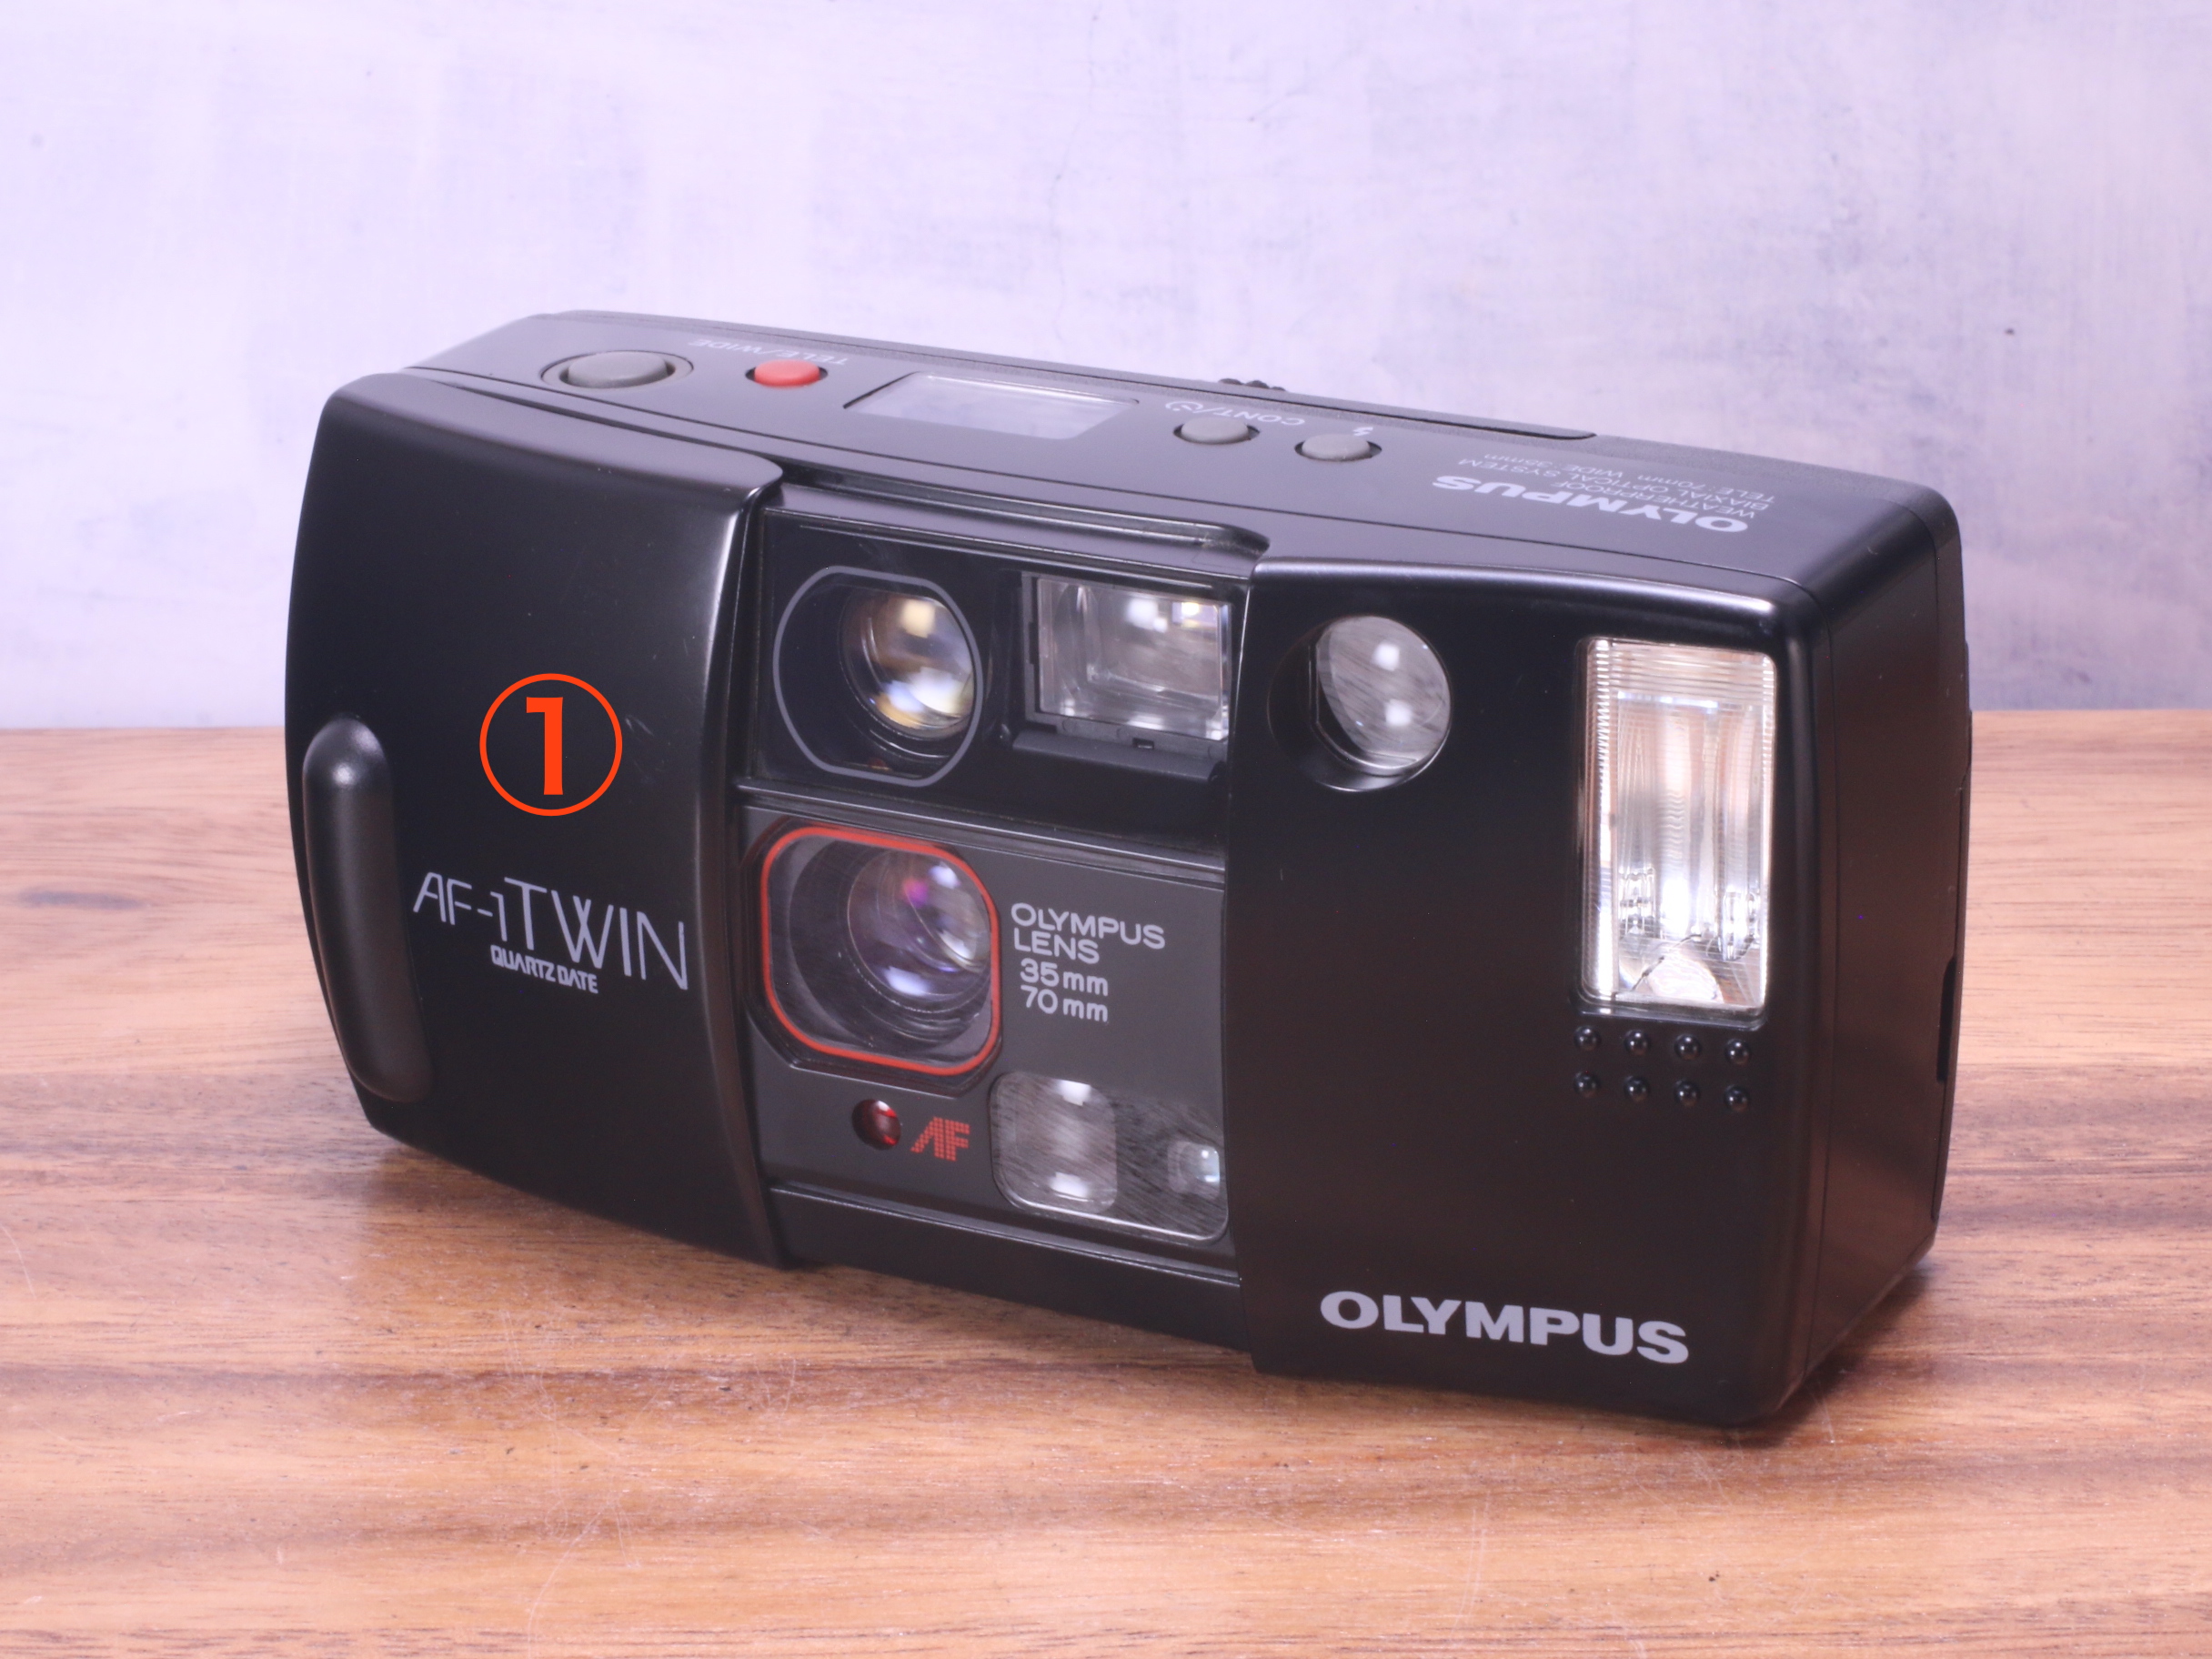 OLYMPUS AF-1 TWIN の使い方 | Totte Me Camera